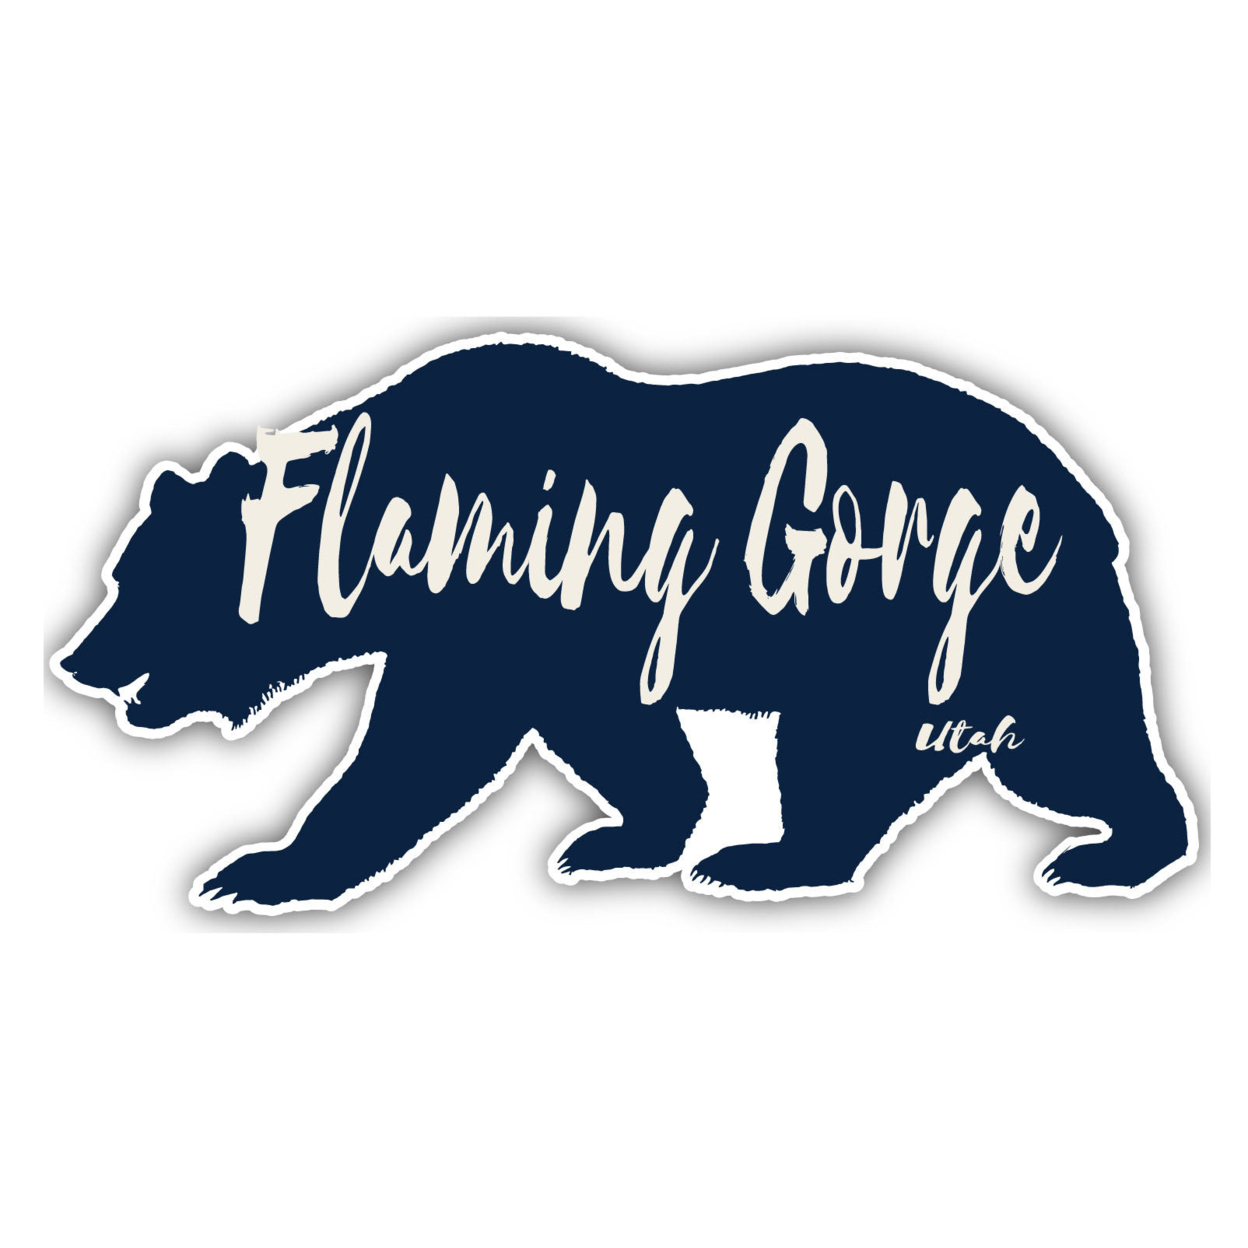 Flaming Gorge Utah Souvenir Decorative Stickers (Choose Theme And Size) - Single Unit, 6-Inch, Bear